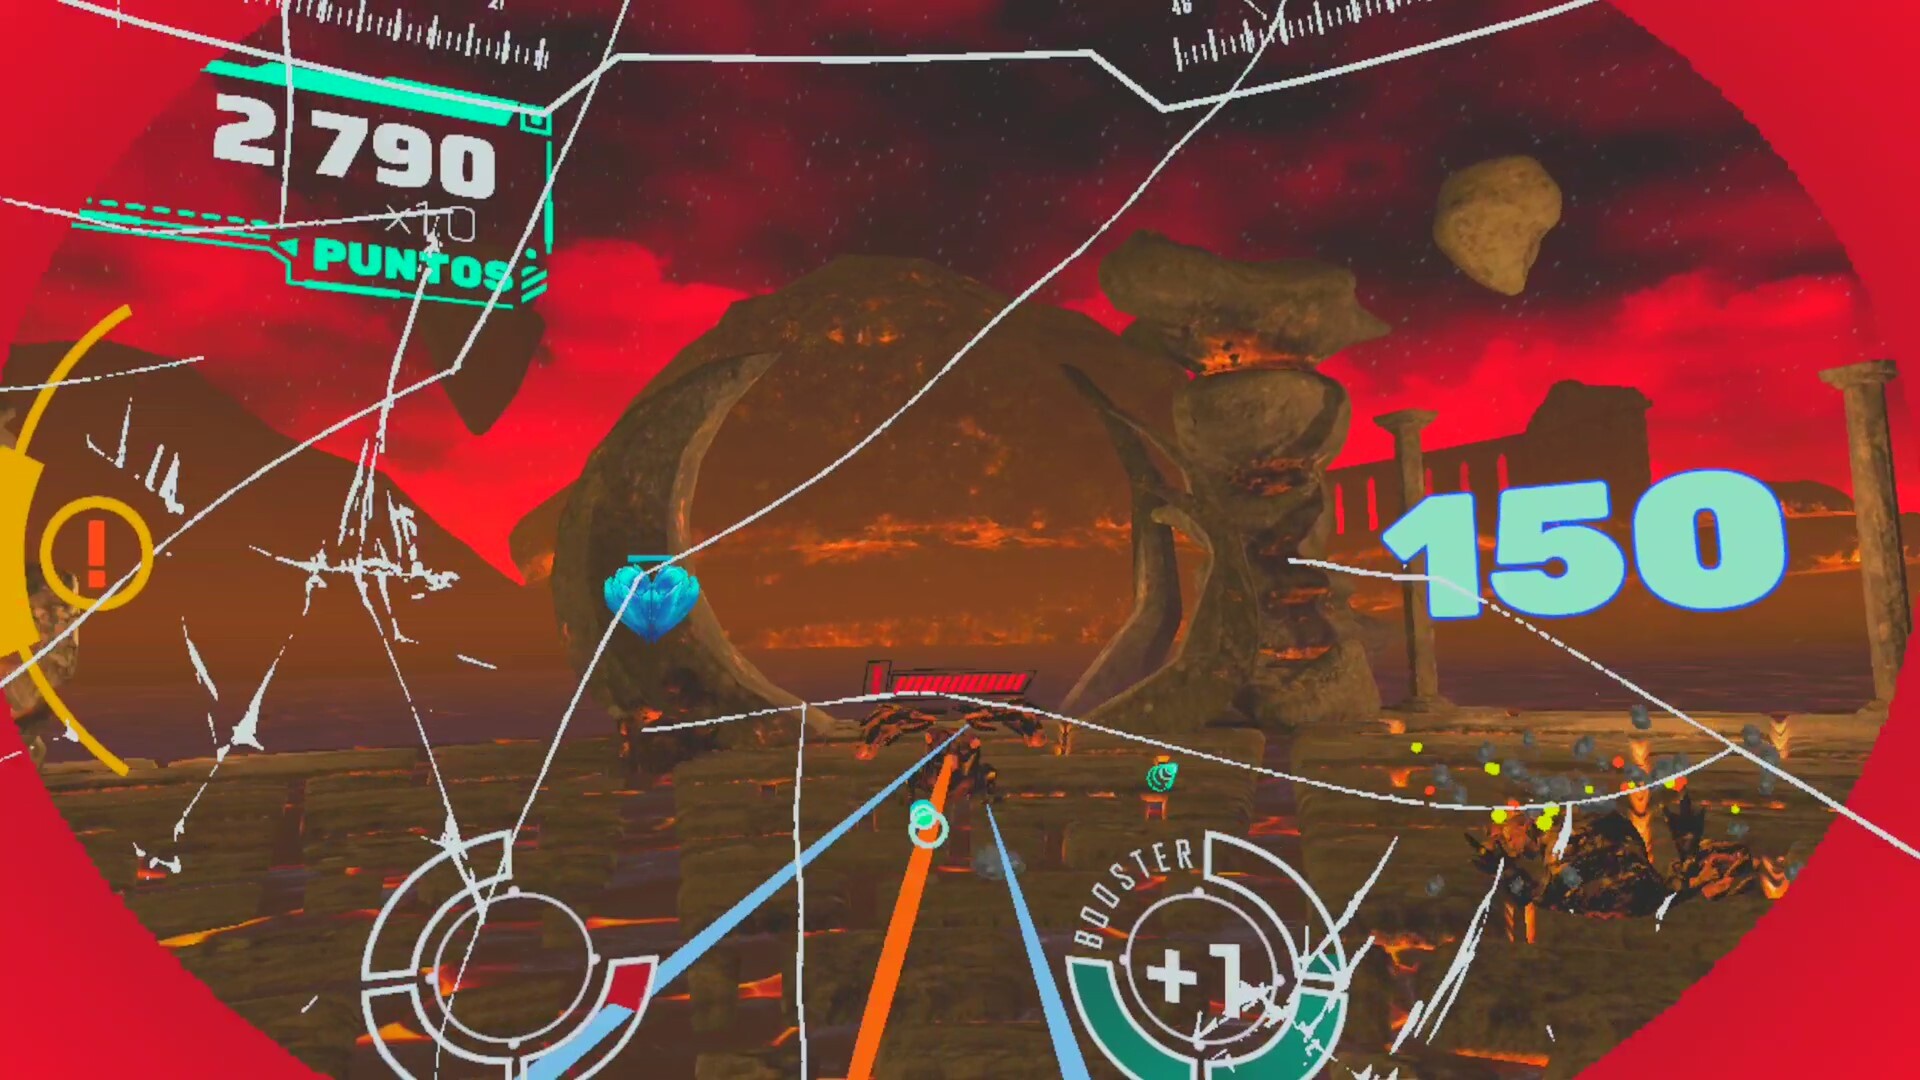 iO Inner Self - The Lava Planet VR on Steam